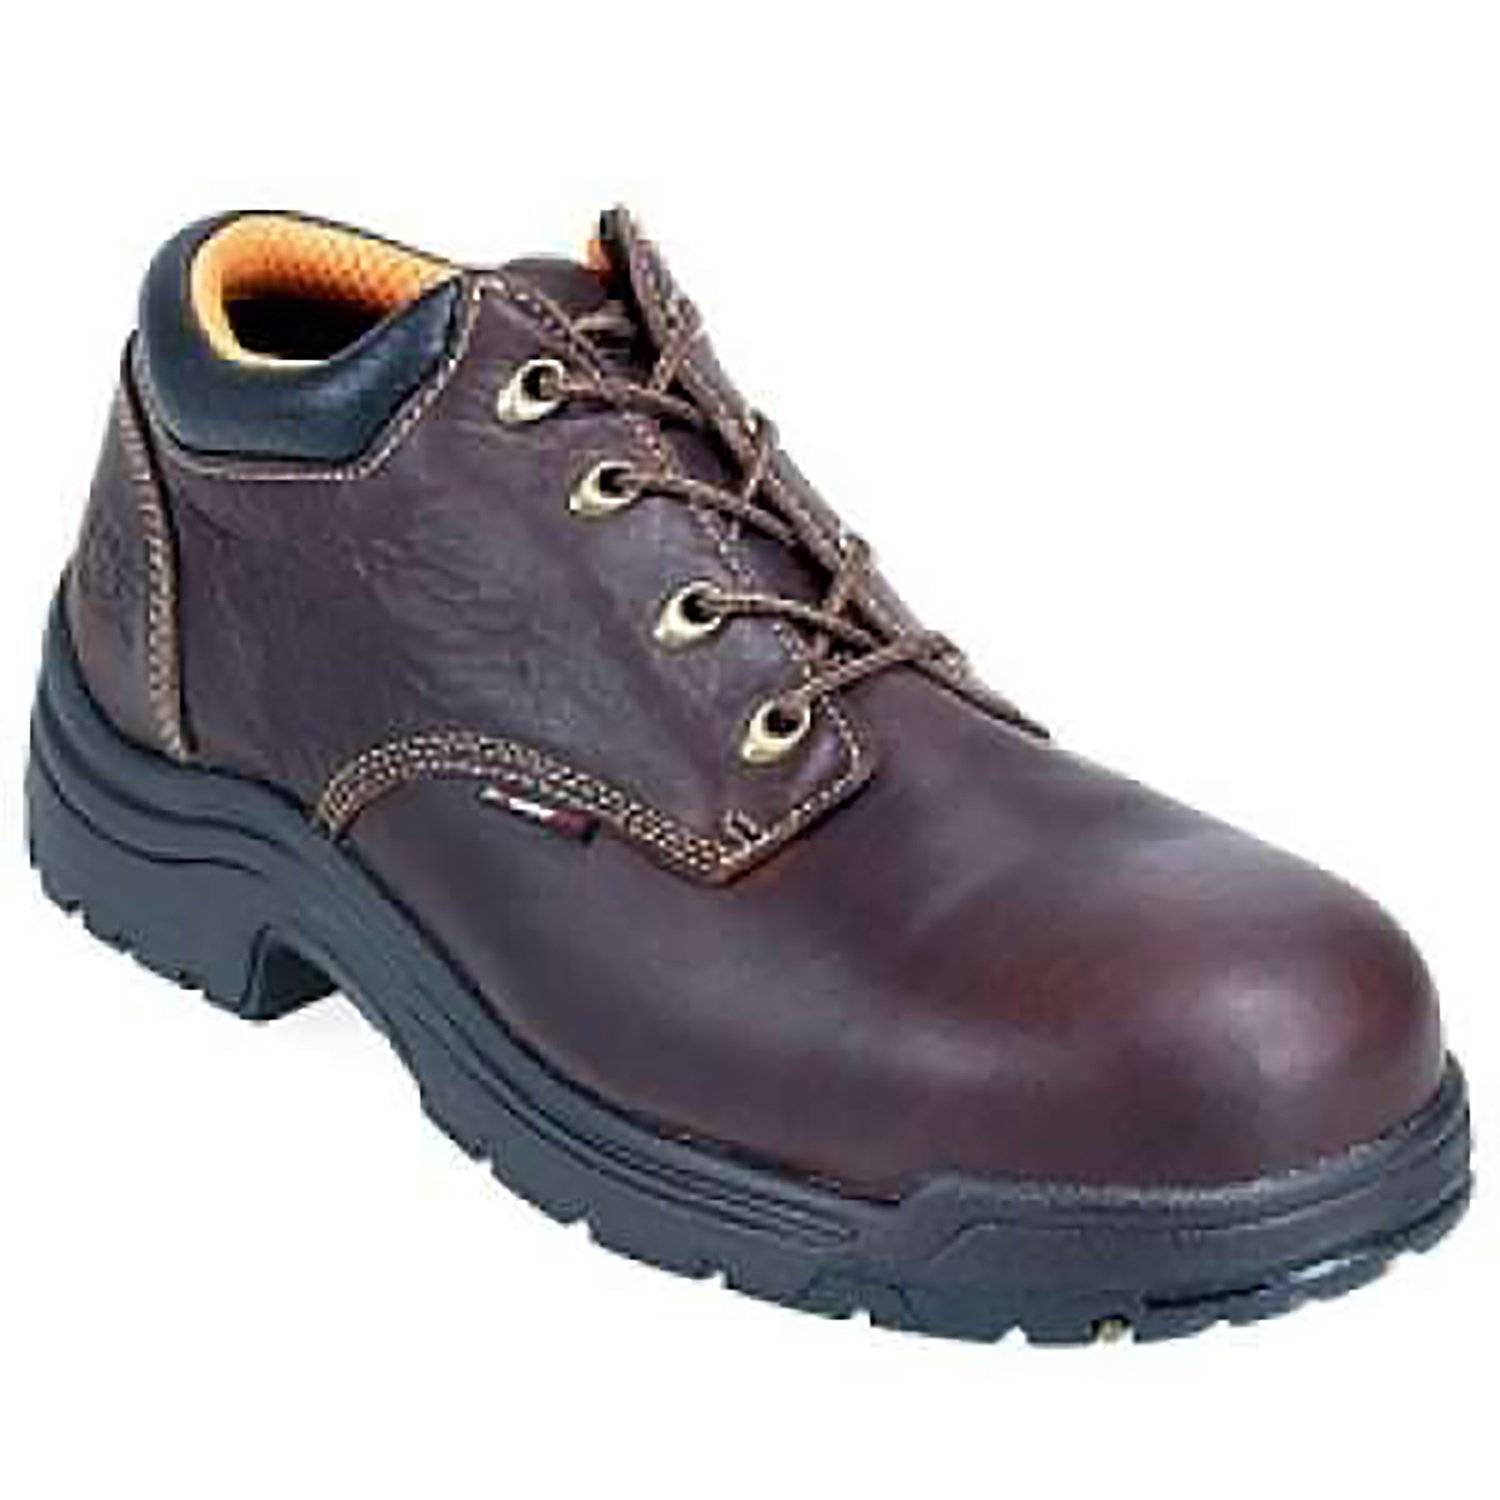 Timberland Pro Titan Men's Alloy Toe Oxford Work Shoes